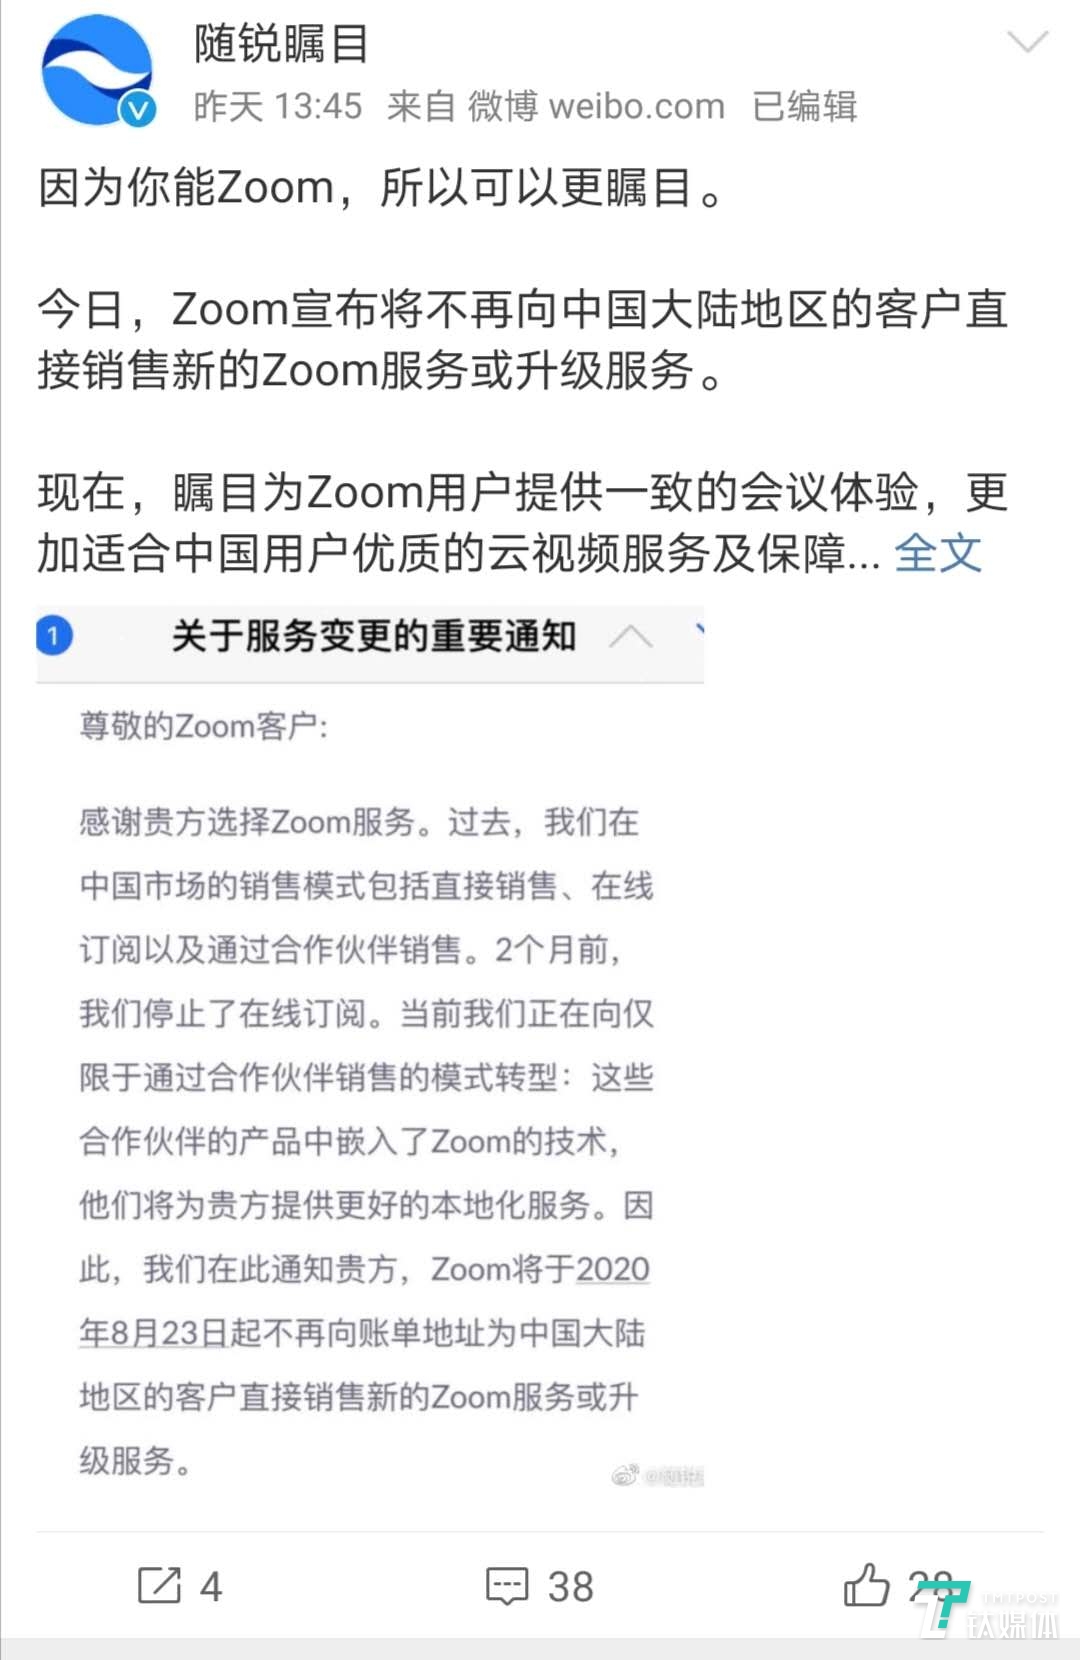 Zoom在中国暂停直销，或与TikTok“同因”